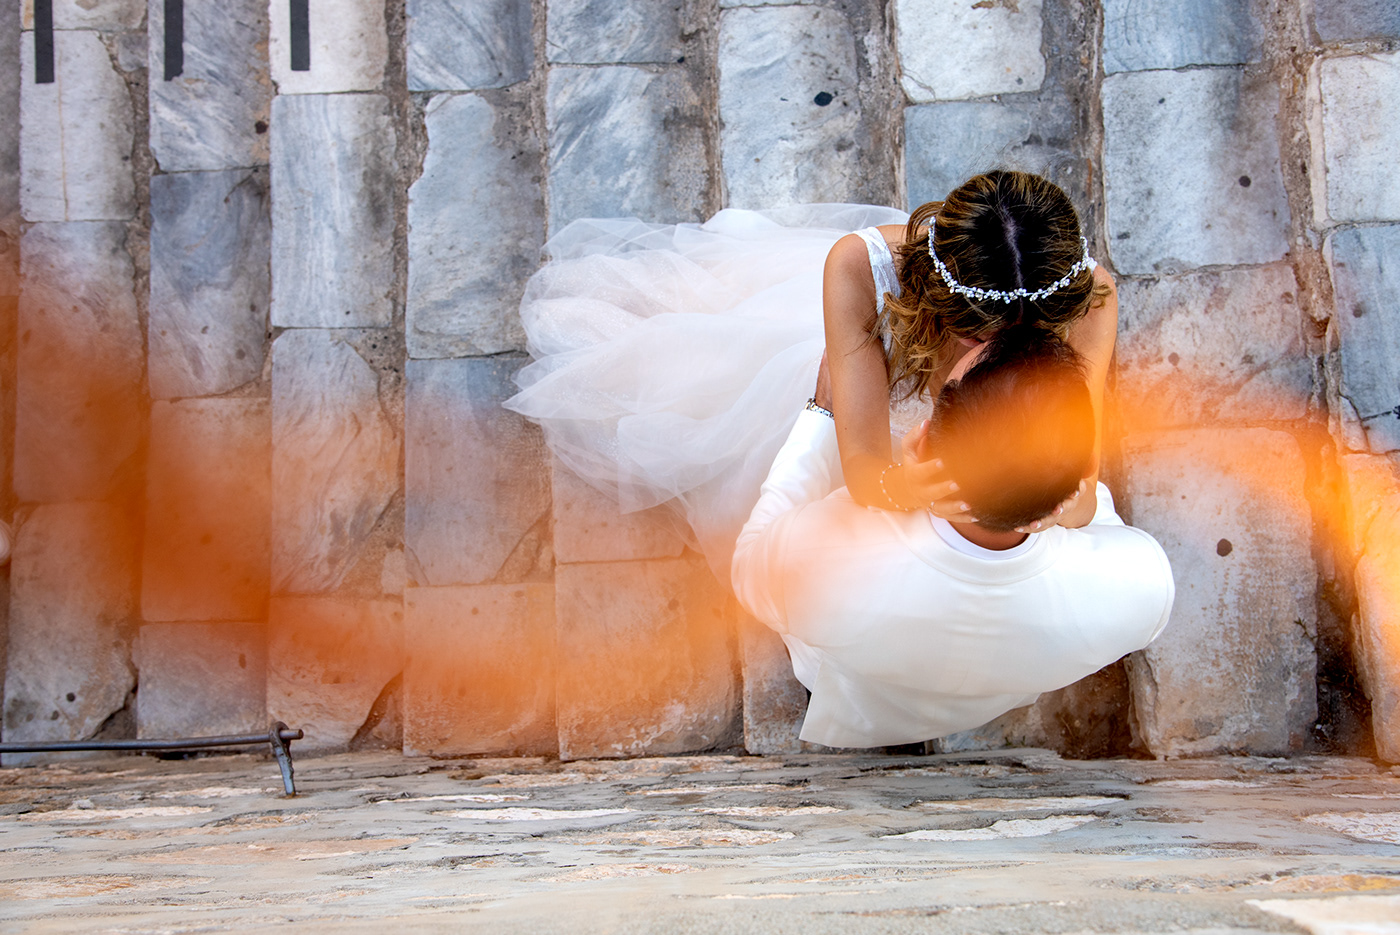 cyclades editorial greekislands Photography  syros WEDDING DRESS WeddingConcept weddinginspiration weddingphotography Weddings